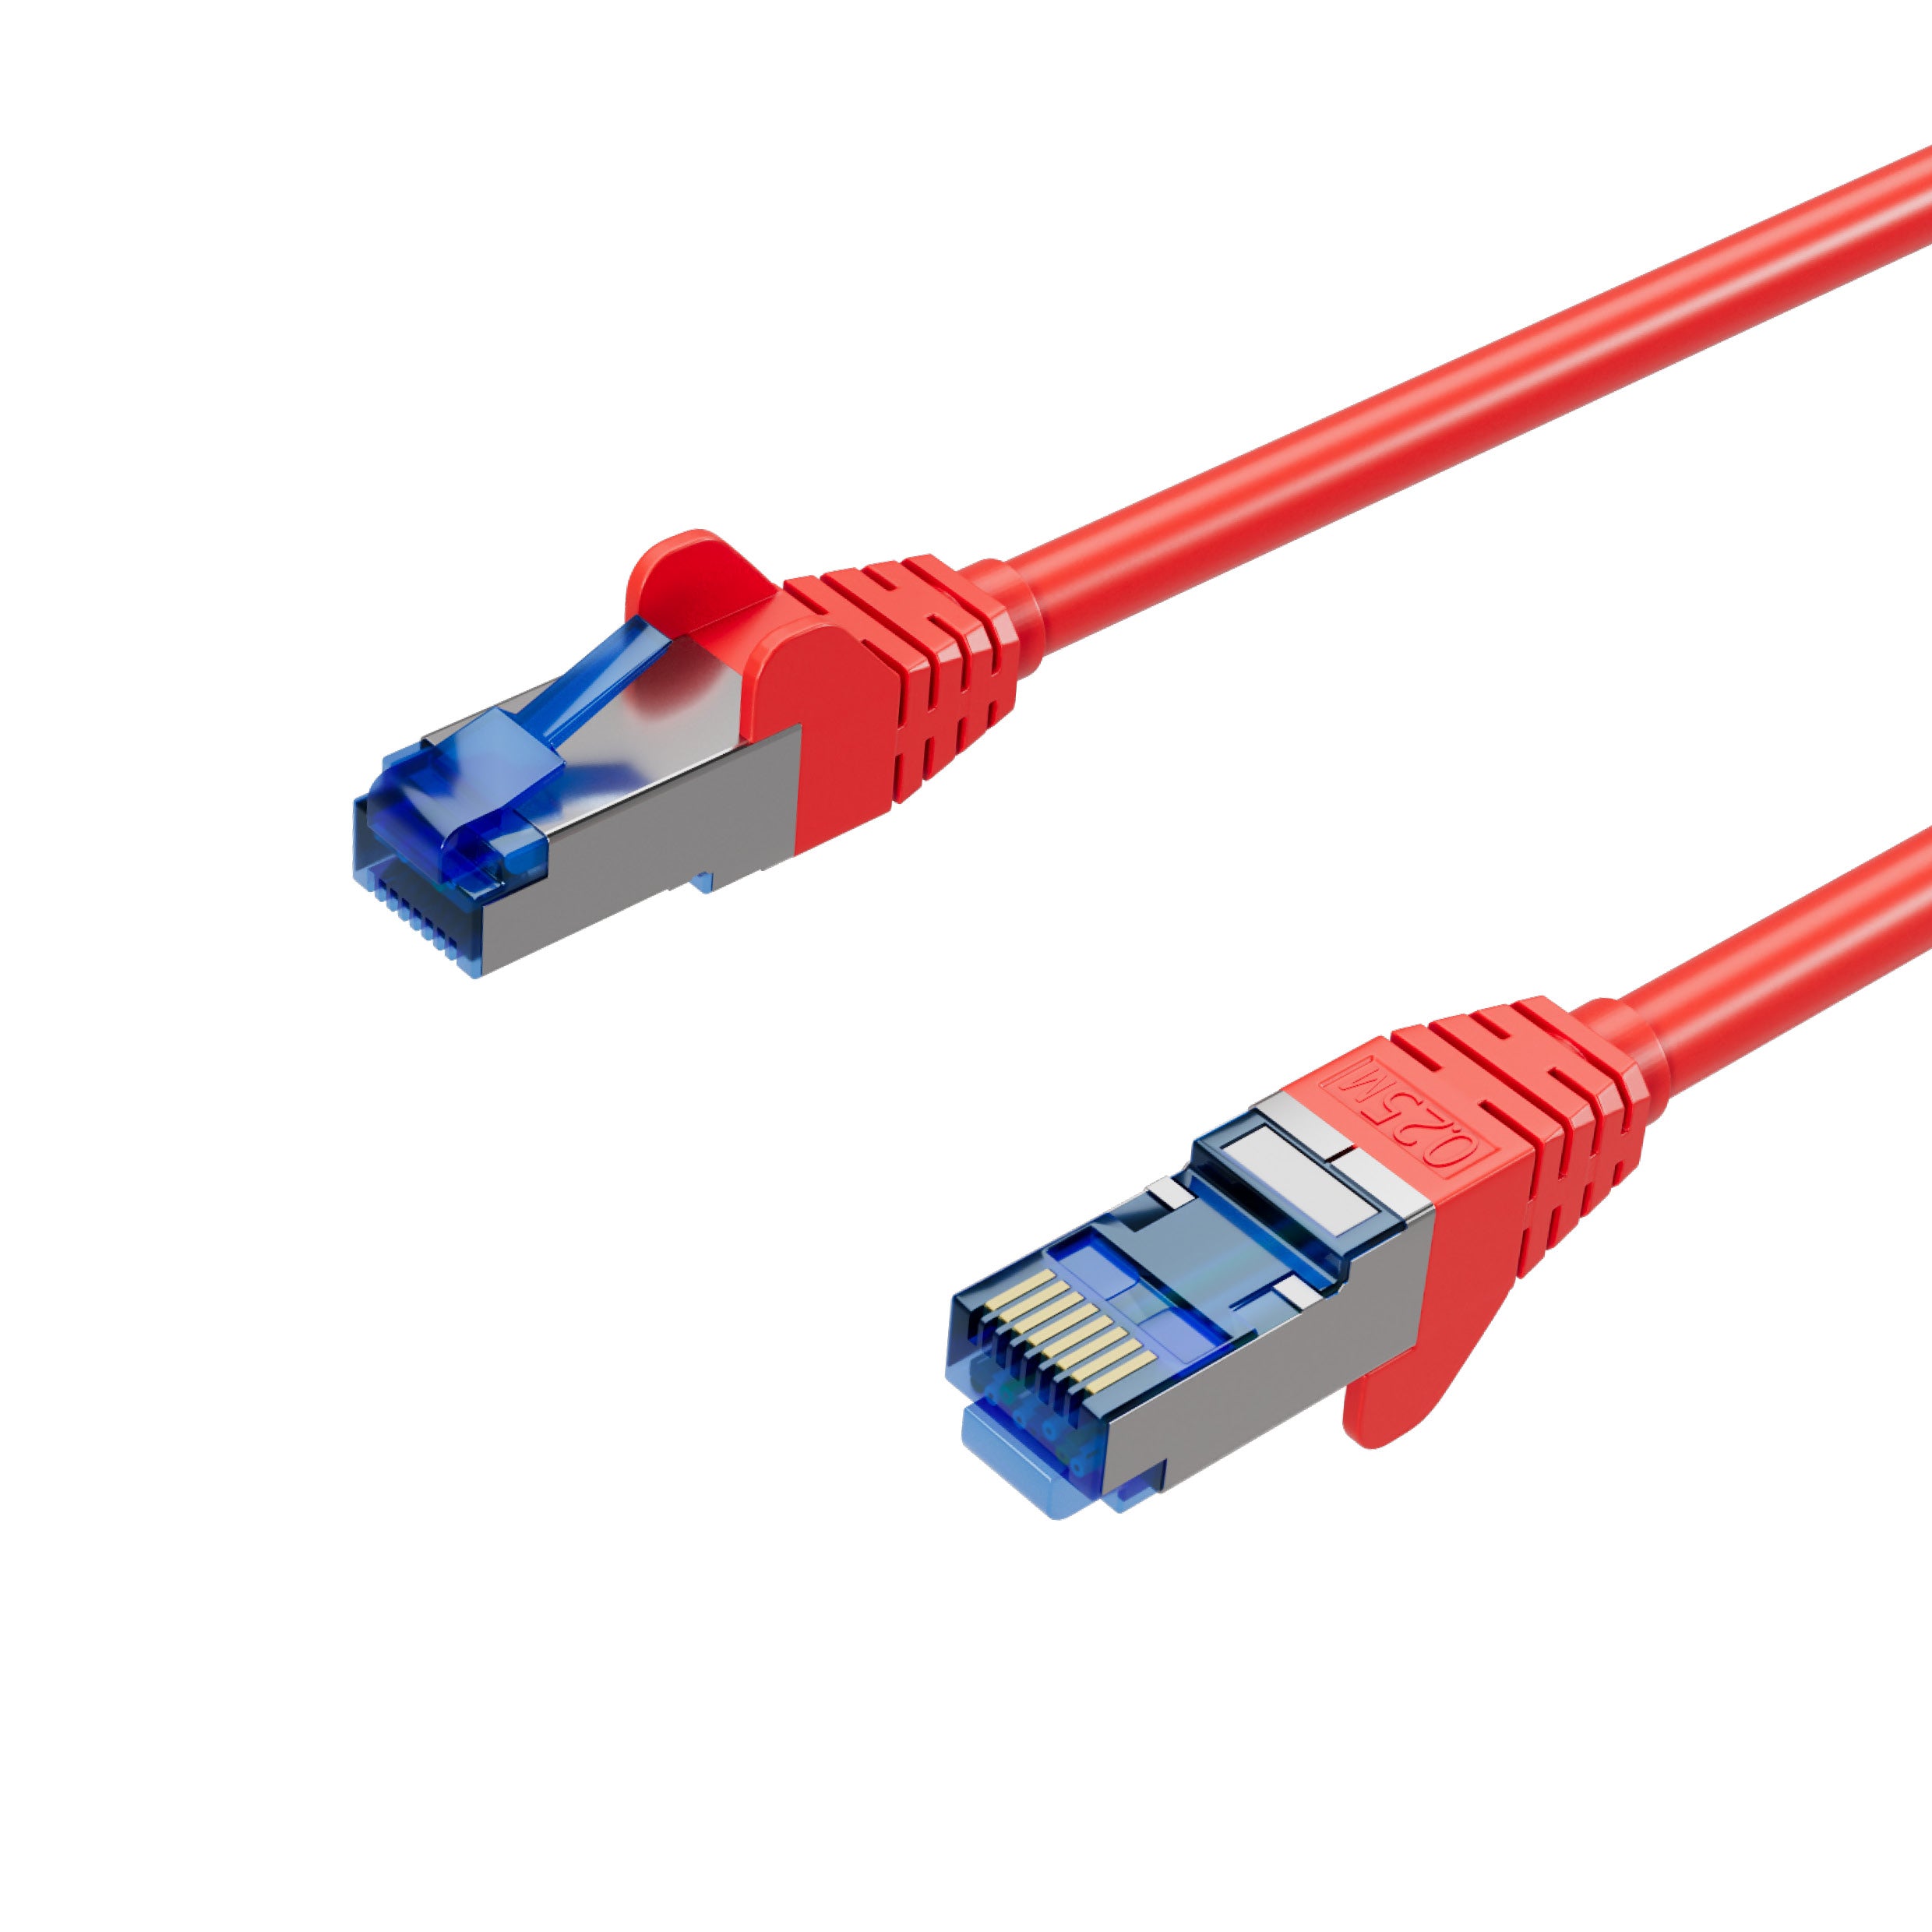 Netzwerkkabel, RJ45 LAN Kabel, Ethernet Cat 6A, S/FTP, PIMF, vergoldete Kontakte